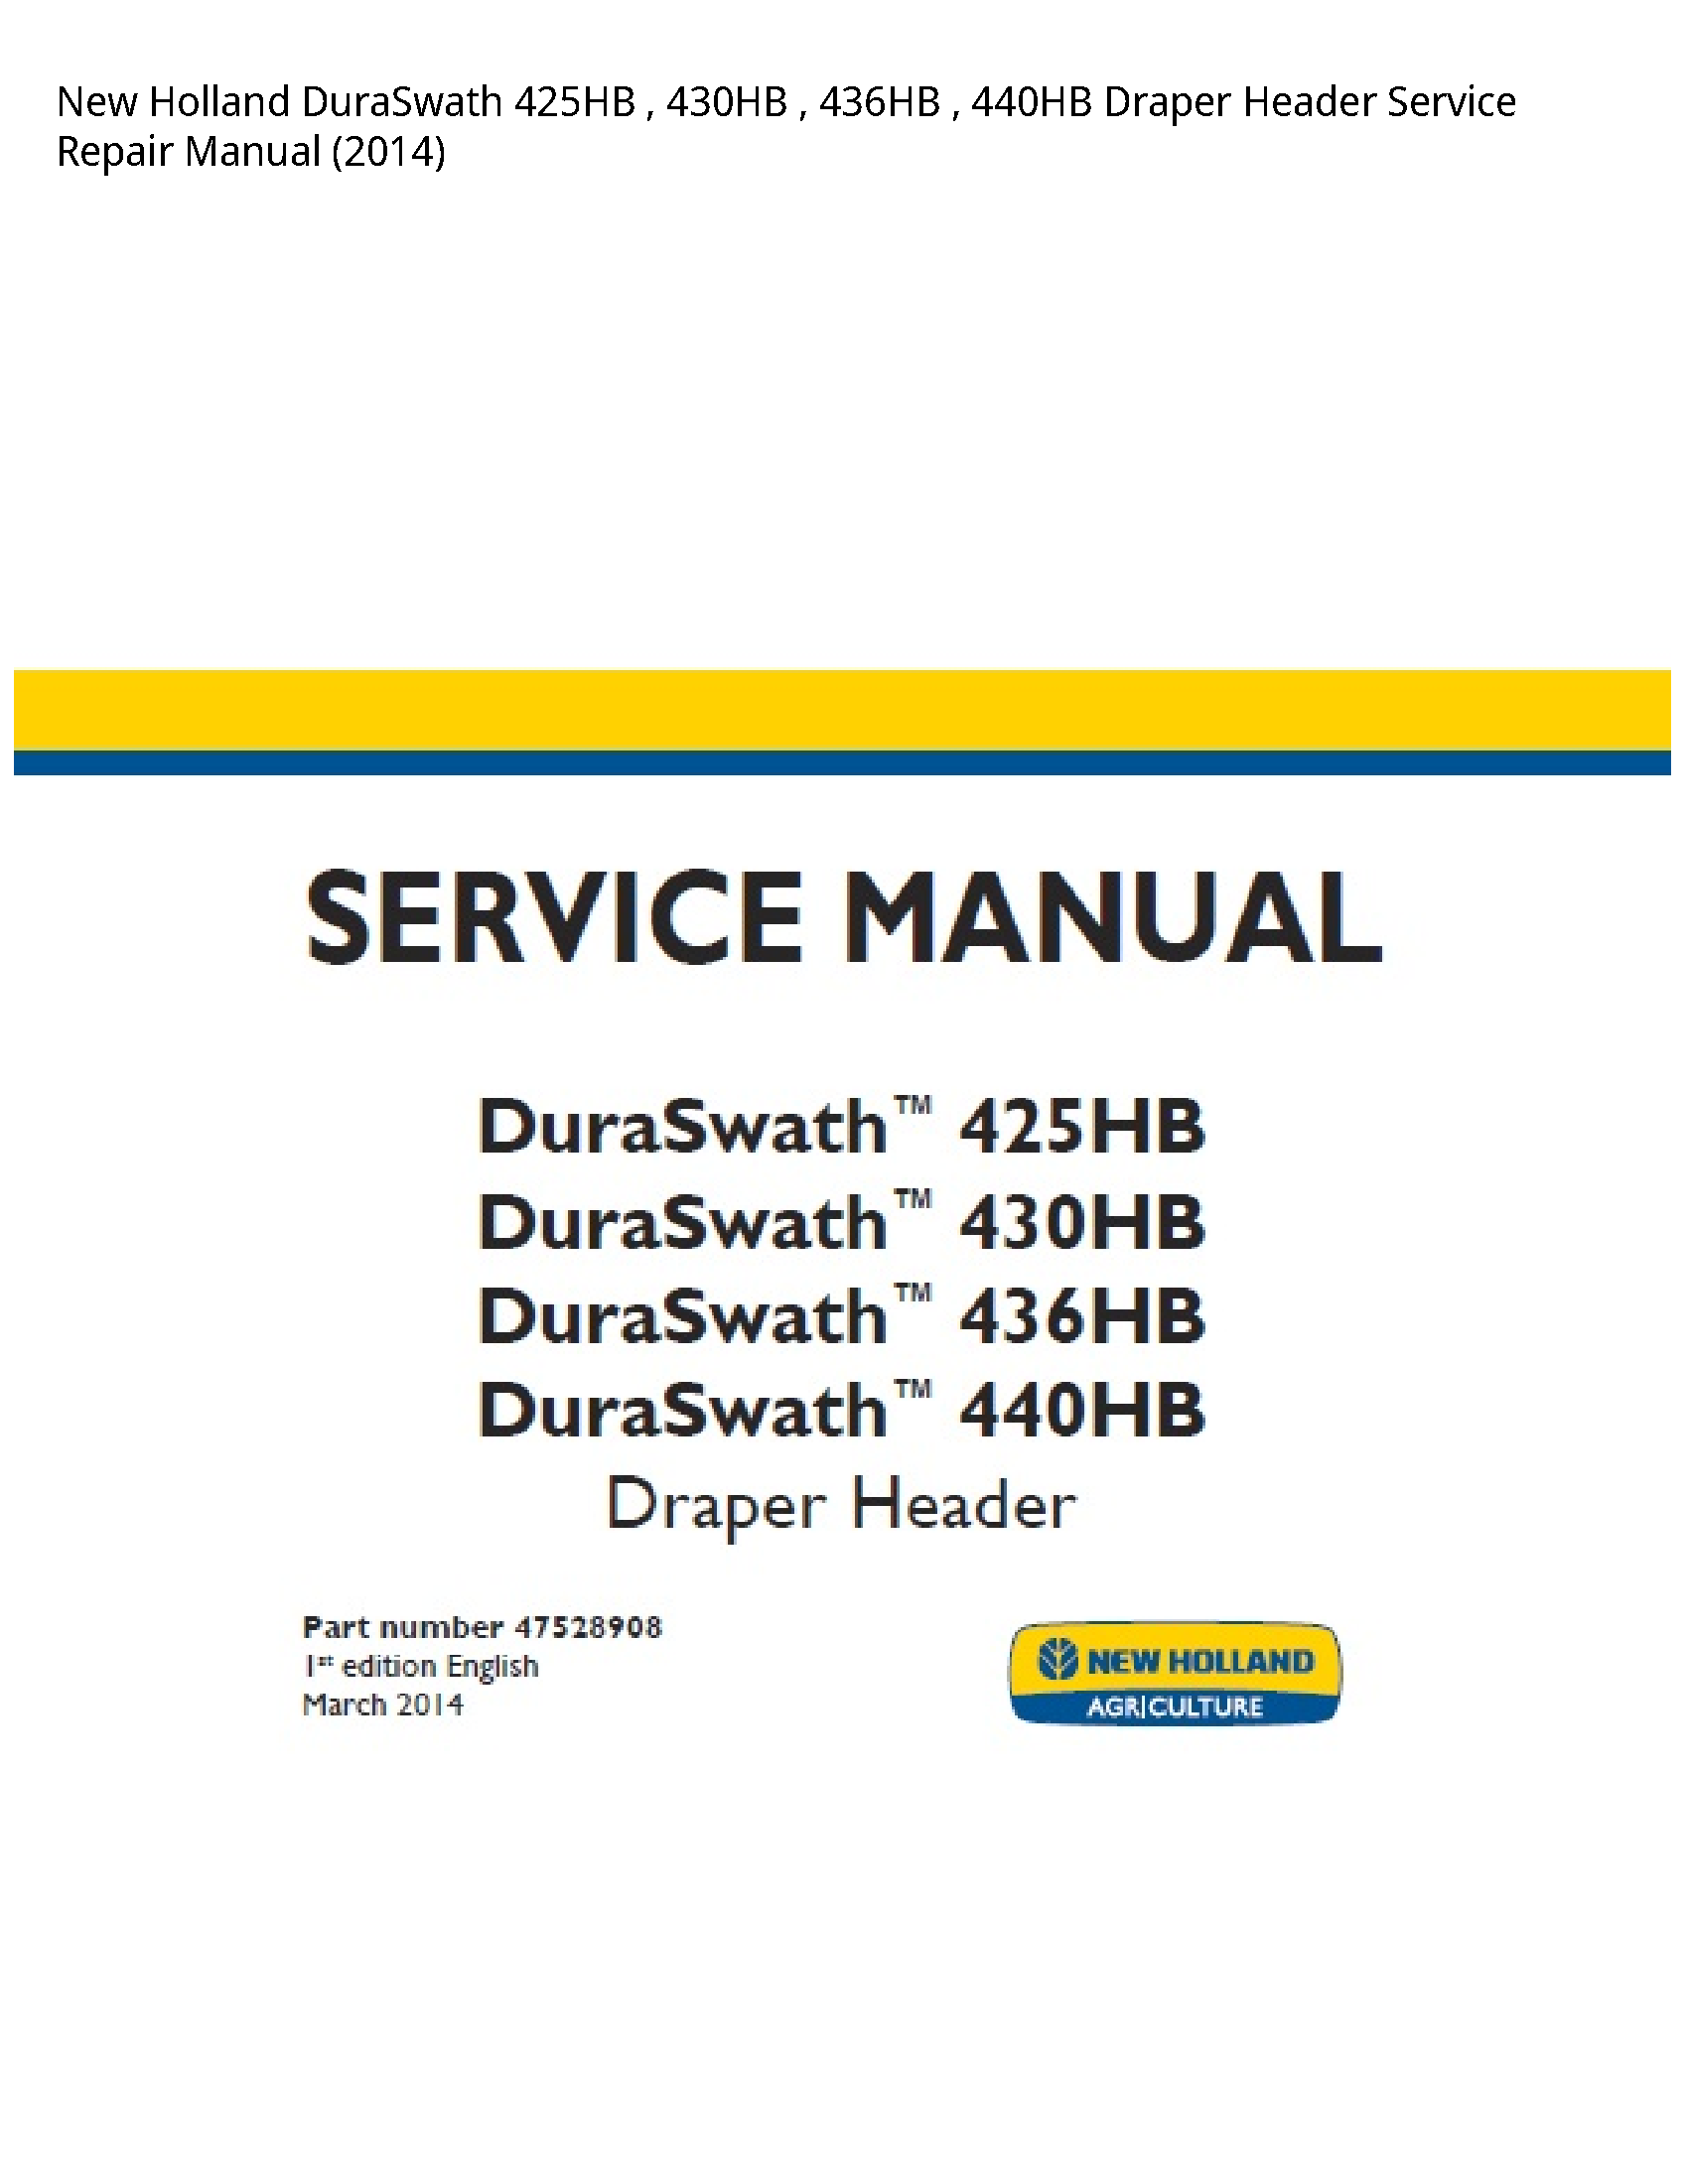 New Holland 425HB DuraSwath Draper Header manual